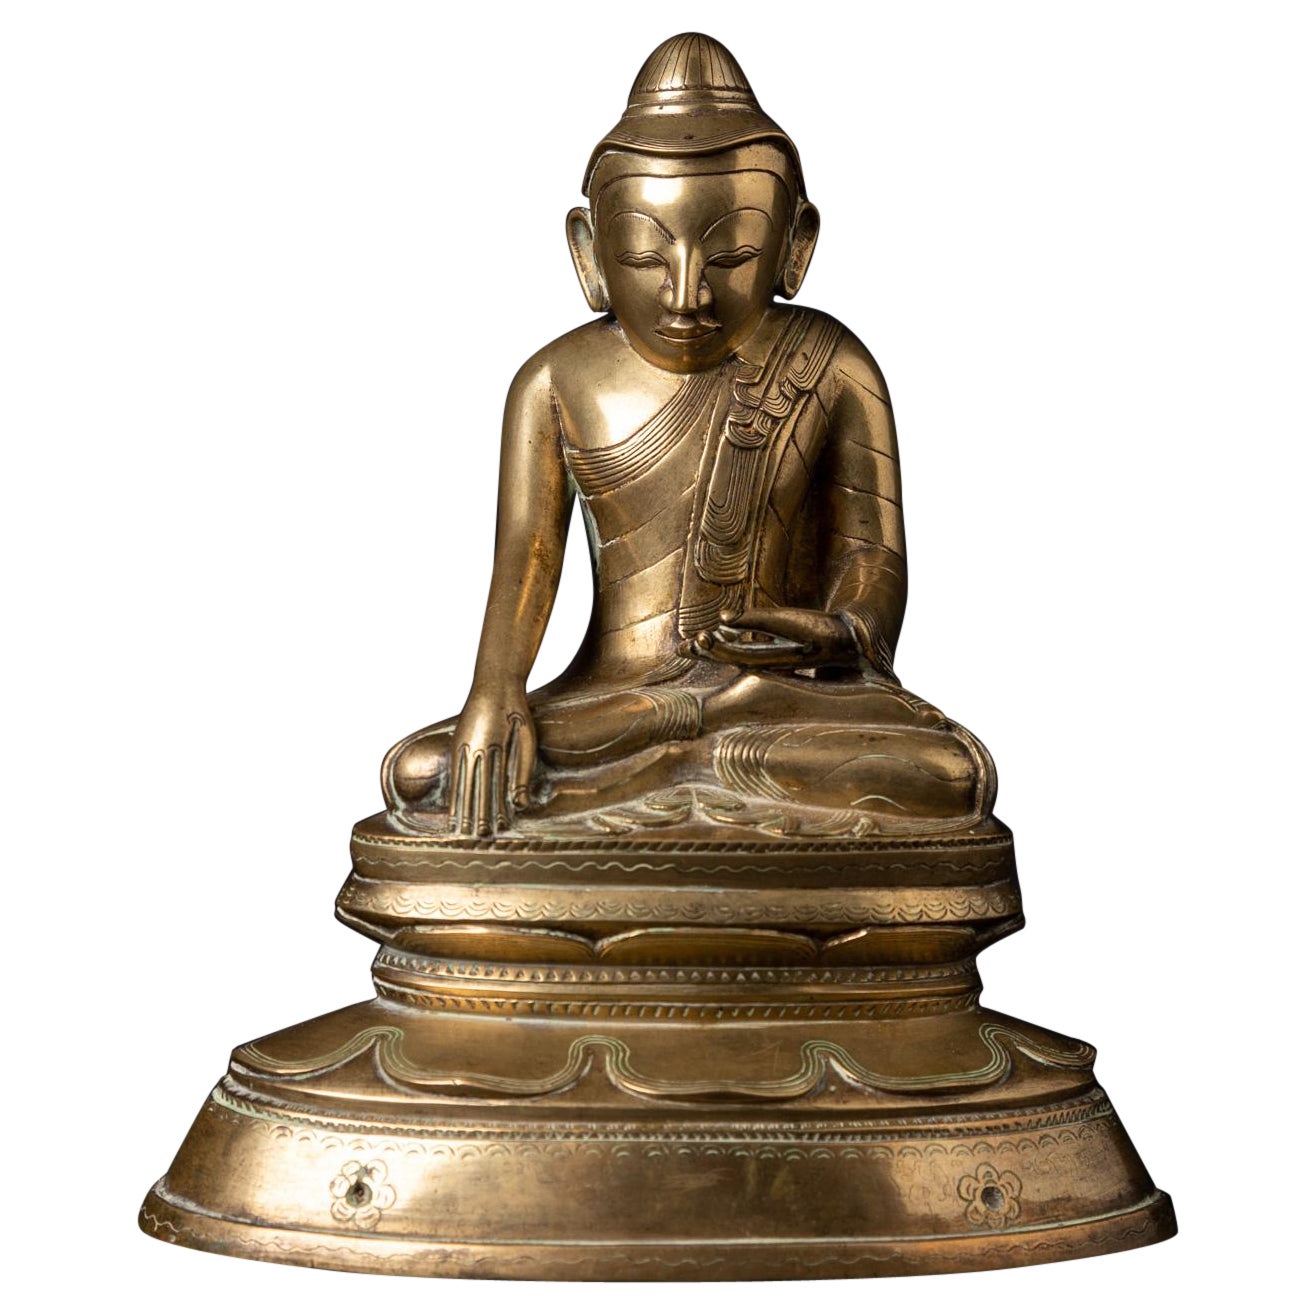 18th century Antique bronze Lotus Buddha statue from Burma